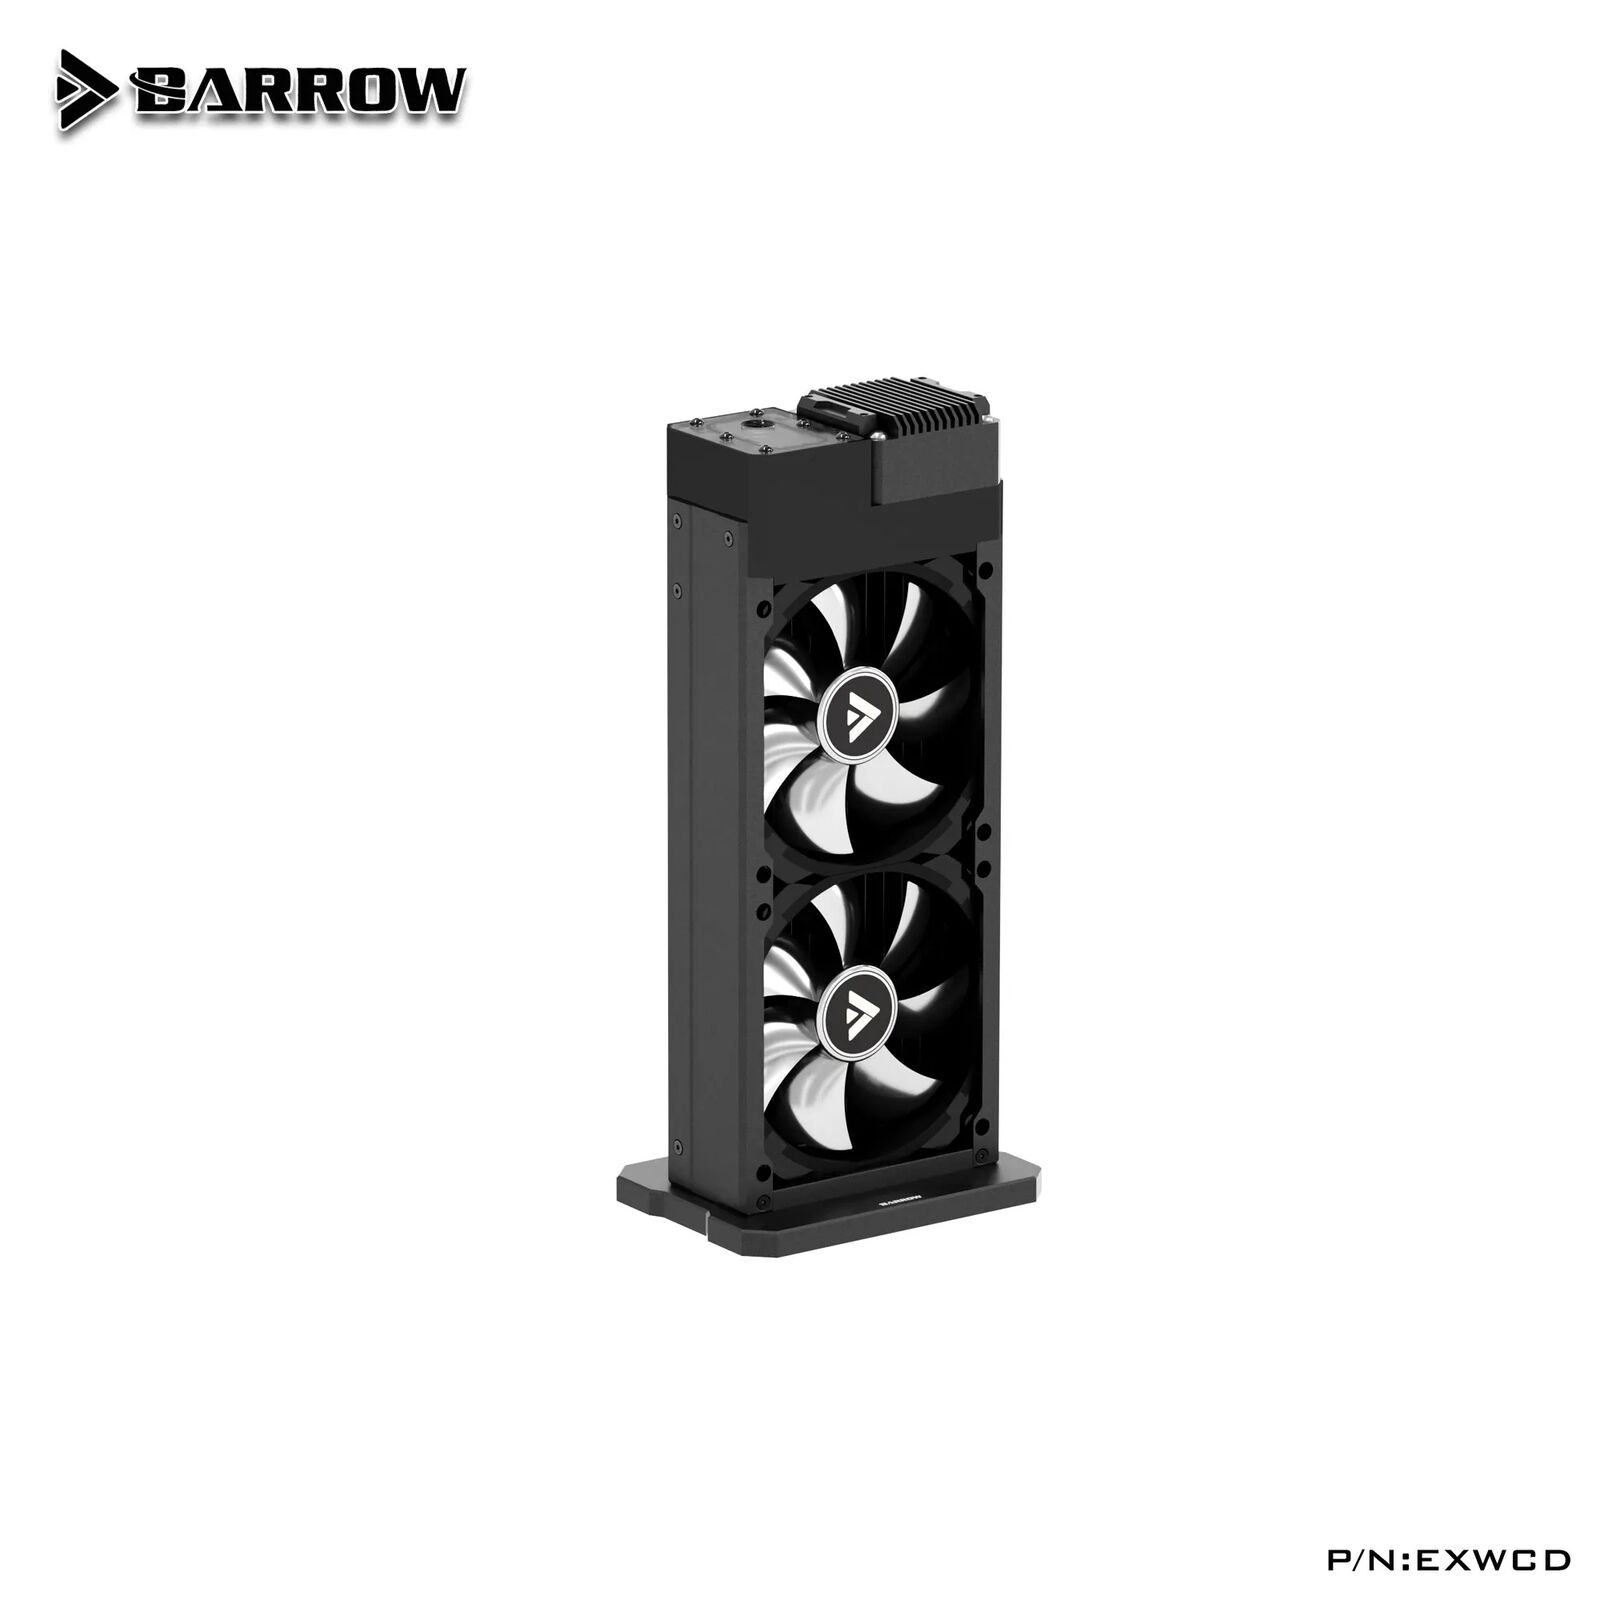 Barrow 240/360mm External Water Cooling Kit 17W PWM DDC Pump Radiator 12CM Fans